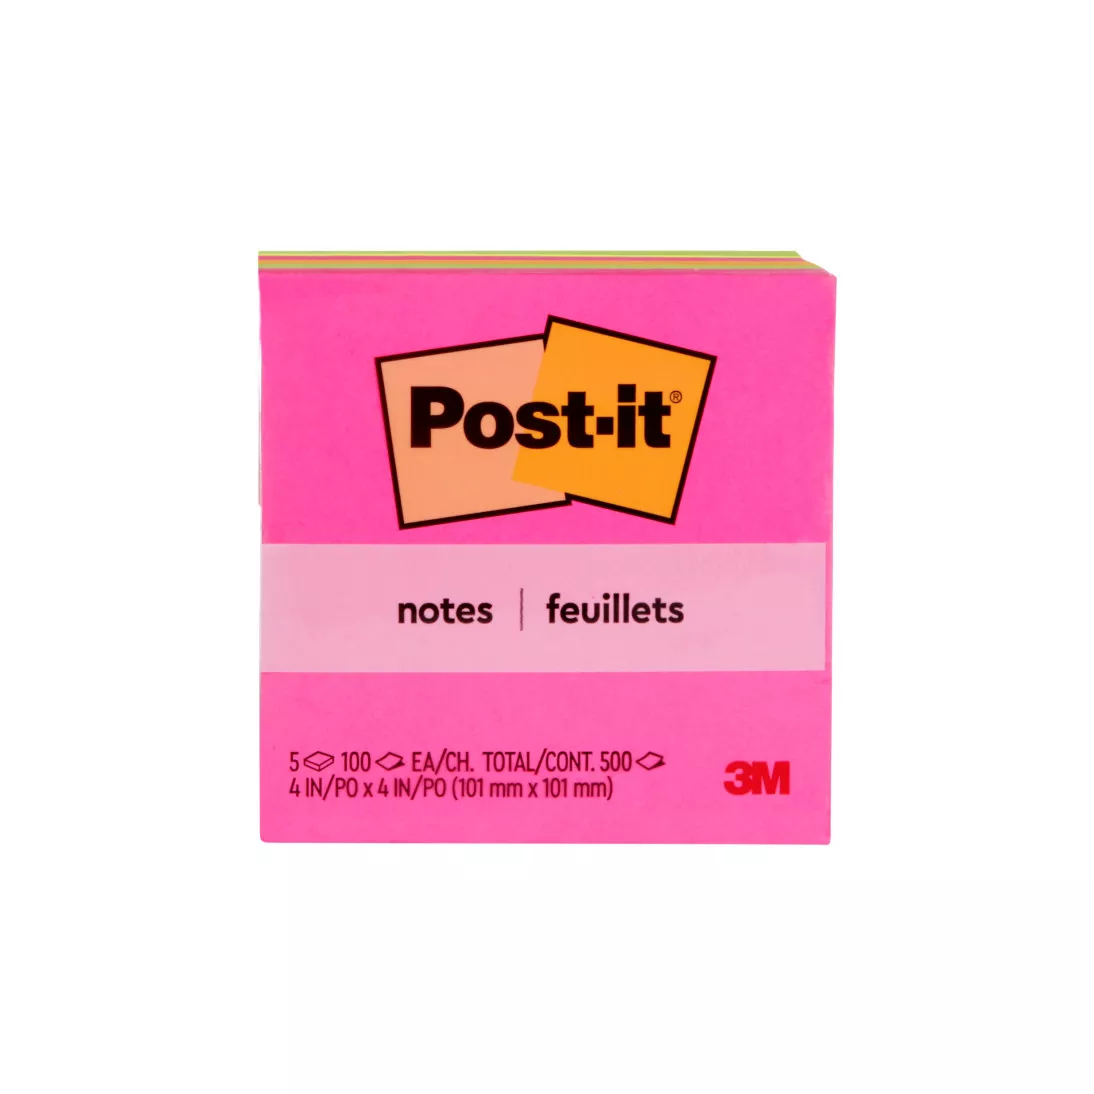 Post-it® Notes 675-5LAN, 4 In X 4 In (101 mm X 101 mm)